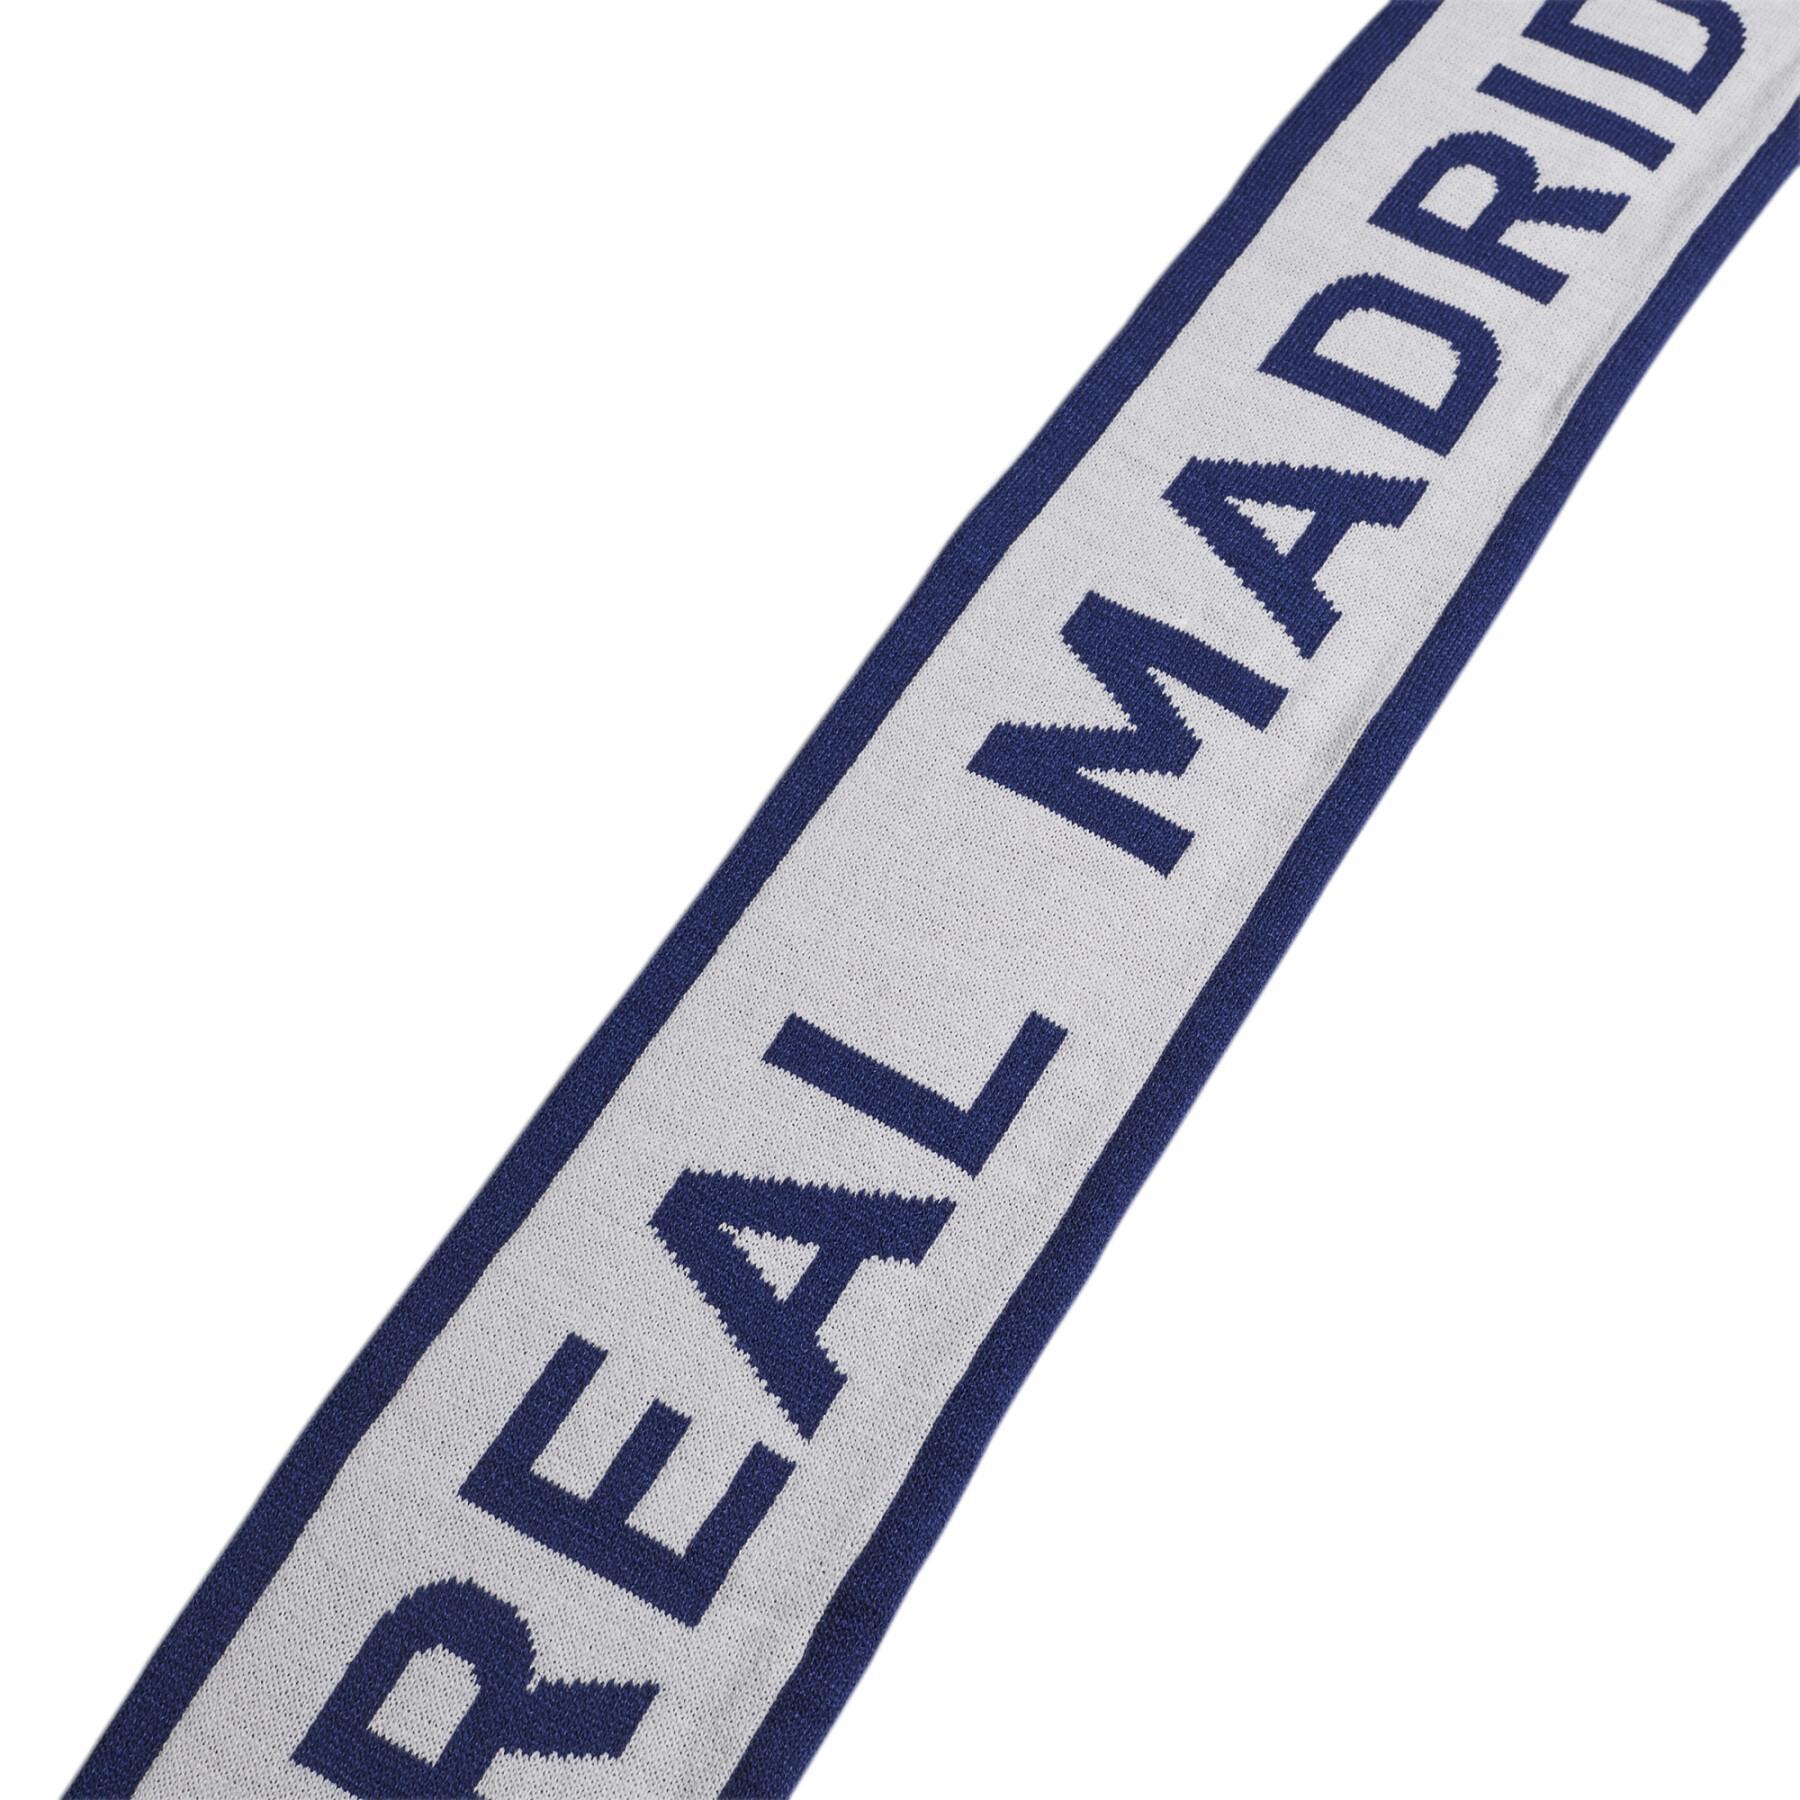 Scarf Real Madrid 2021/22